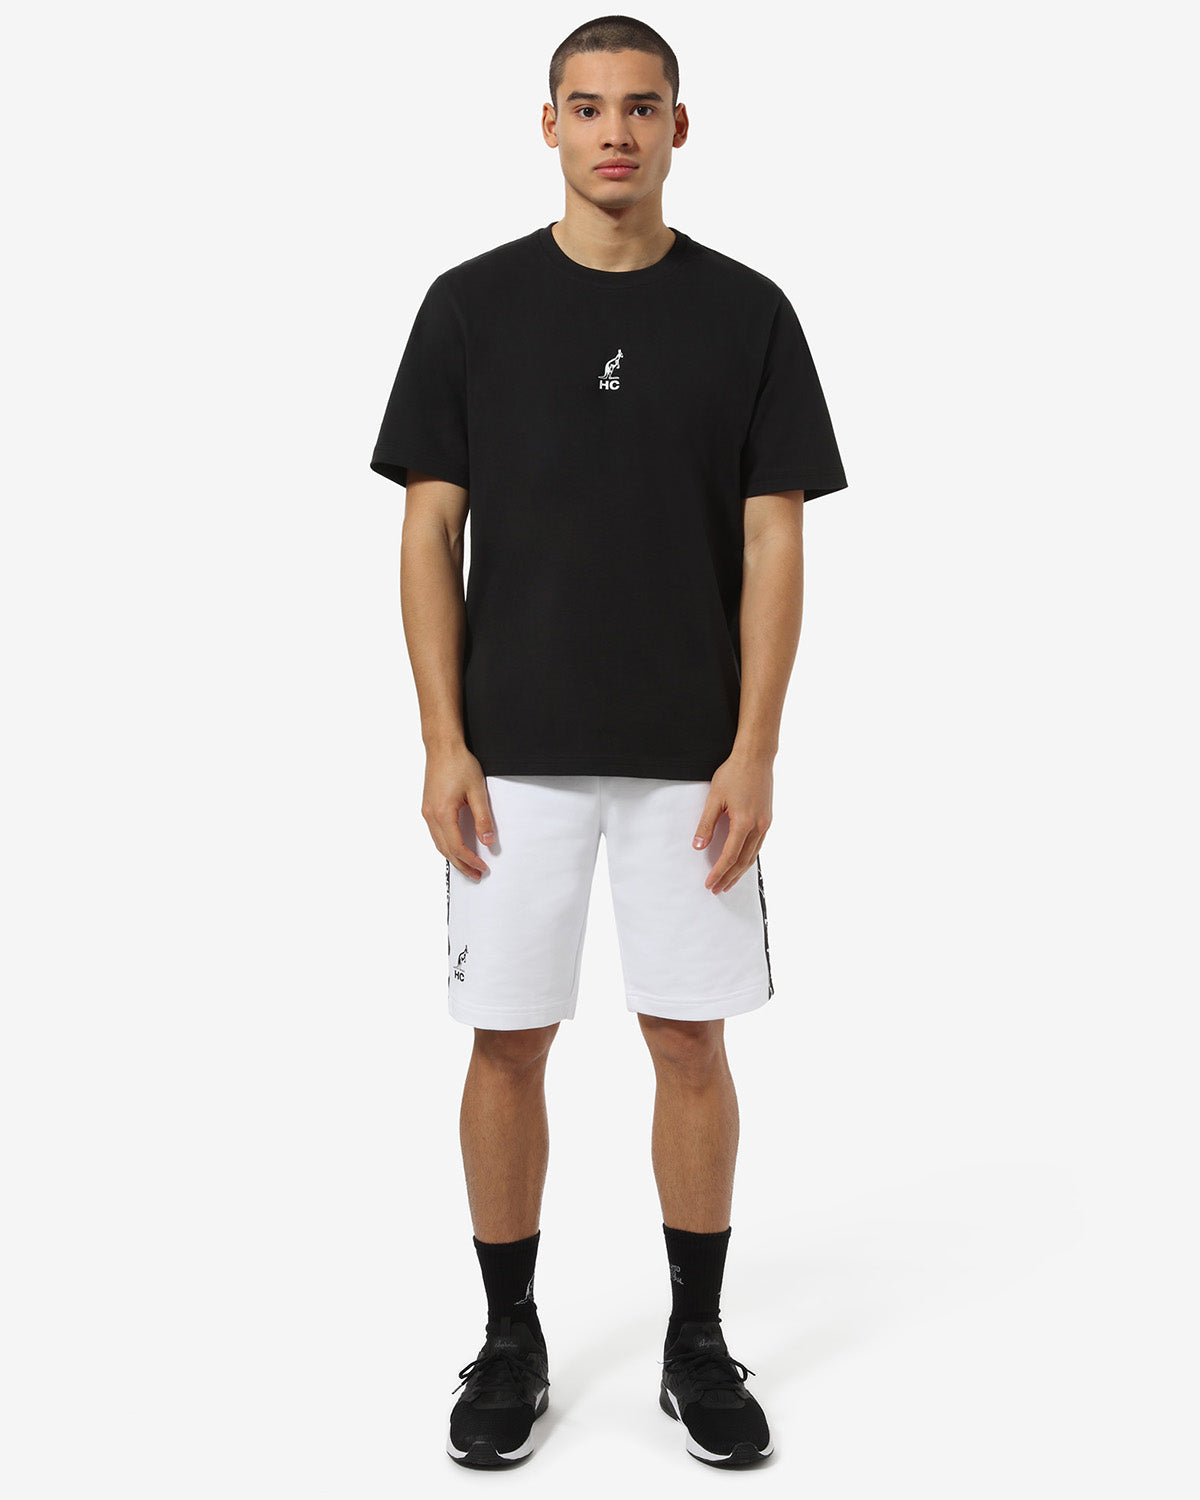 Angel T-Shirt: Australian Hard Court